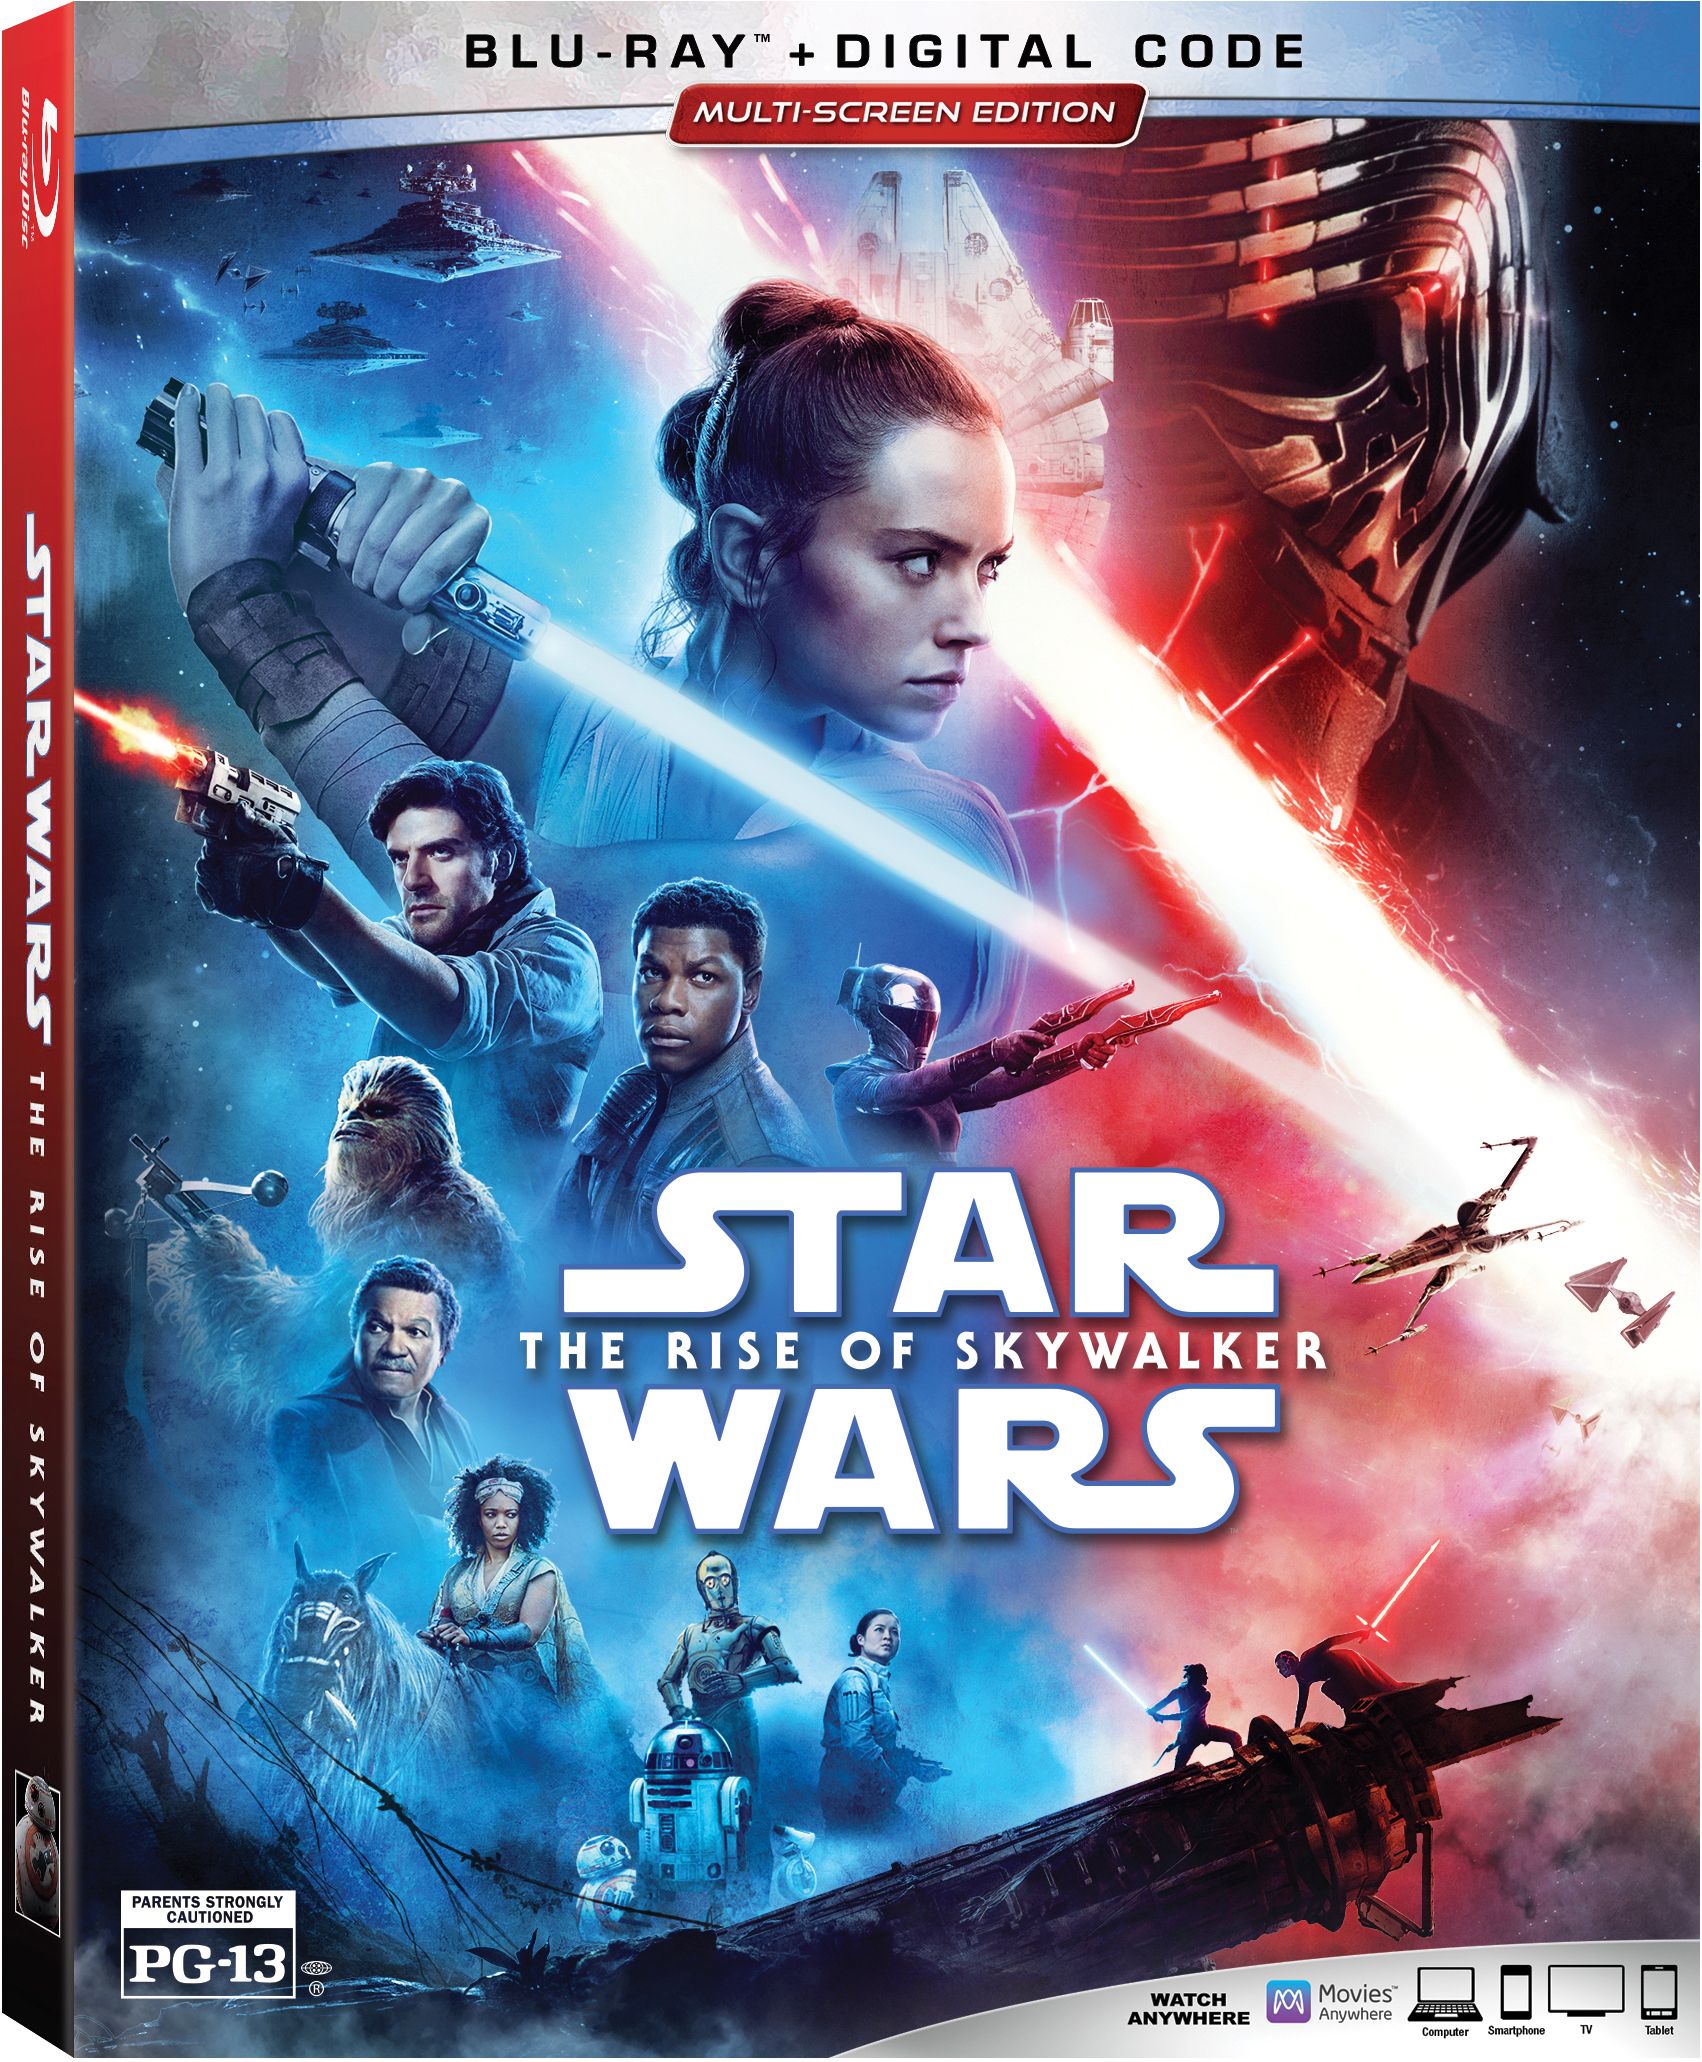 The Rise of Skywalker Blu-ray Art